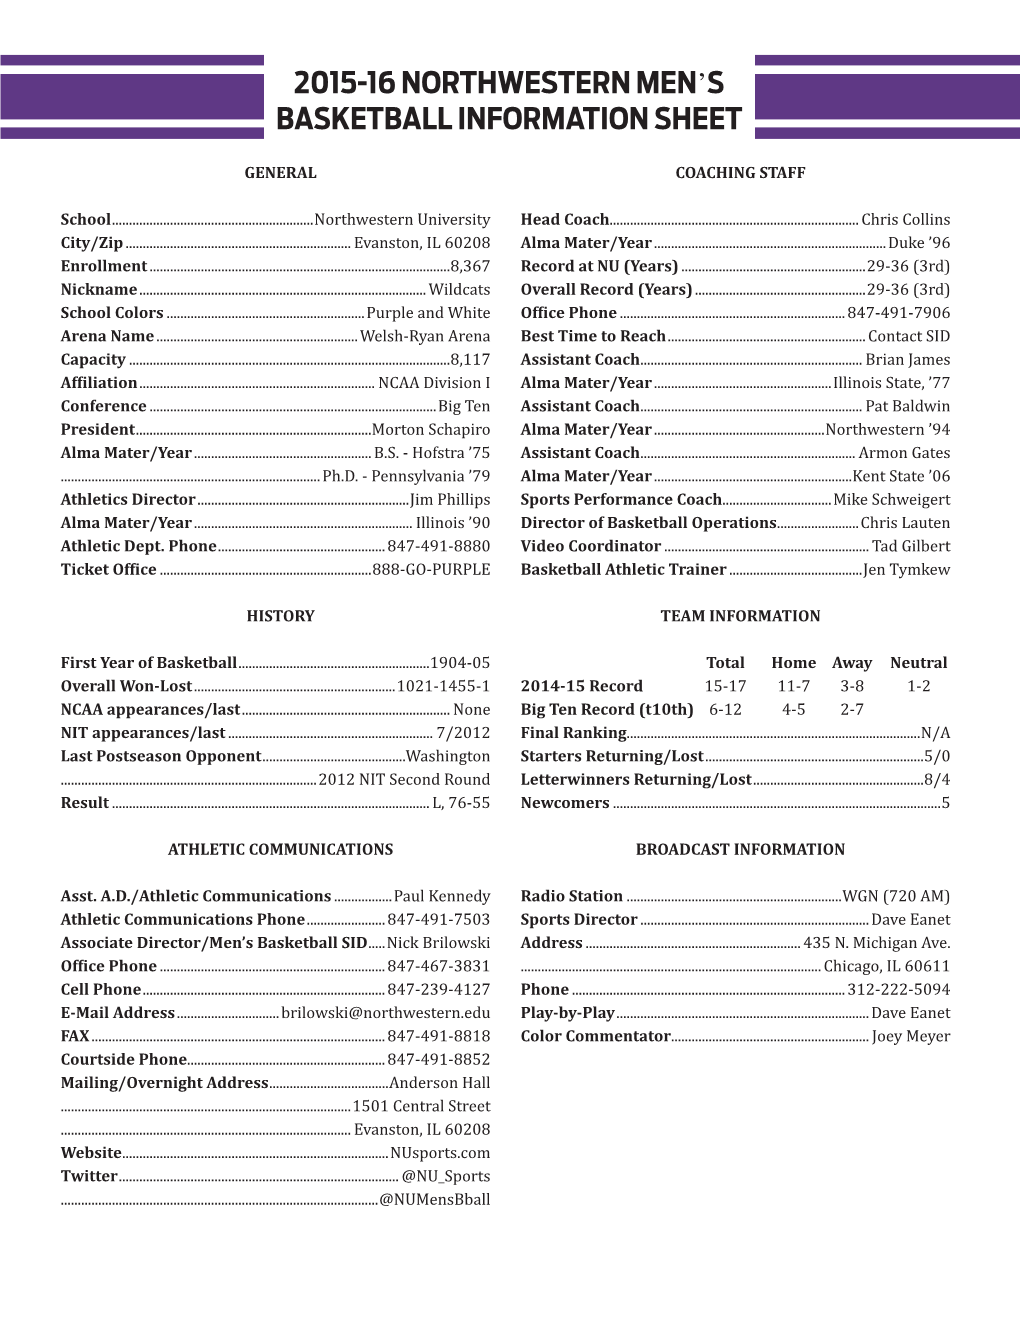 2015-16 Northwestern Men's Basketball Information Sheet